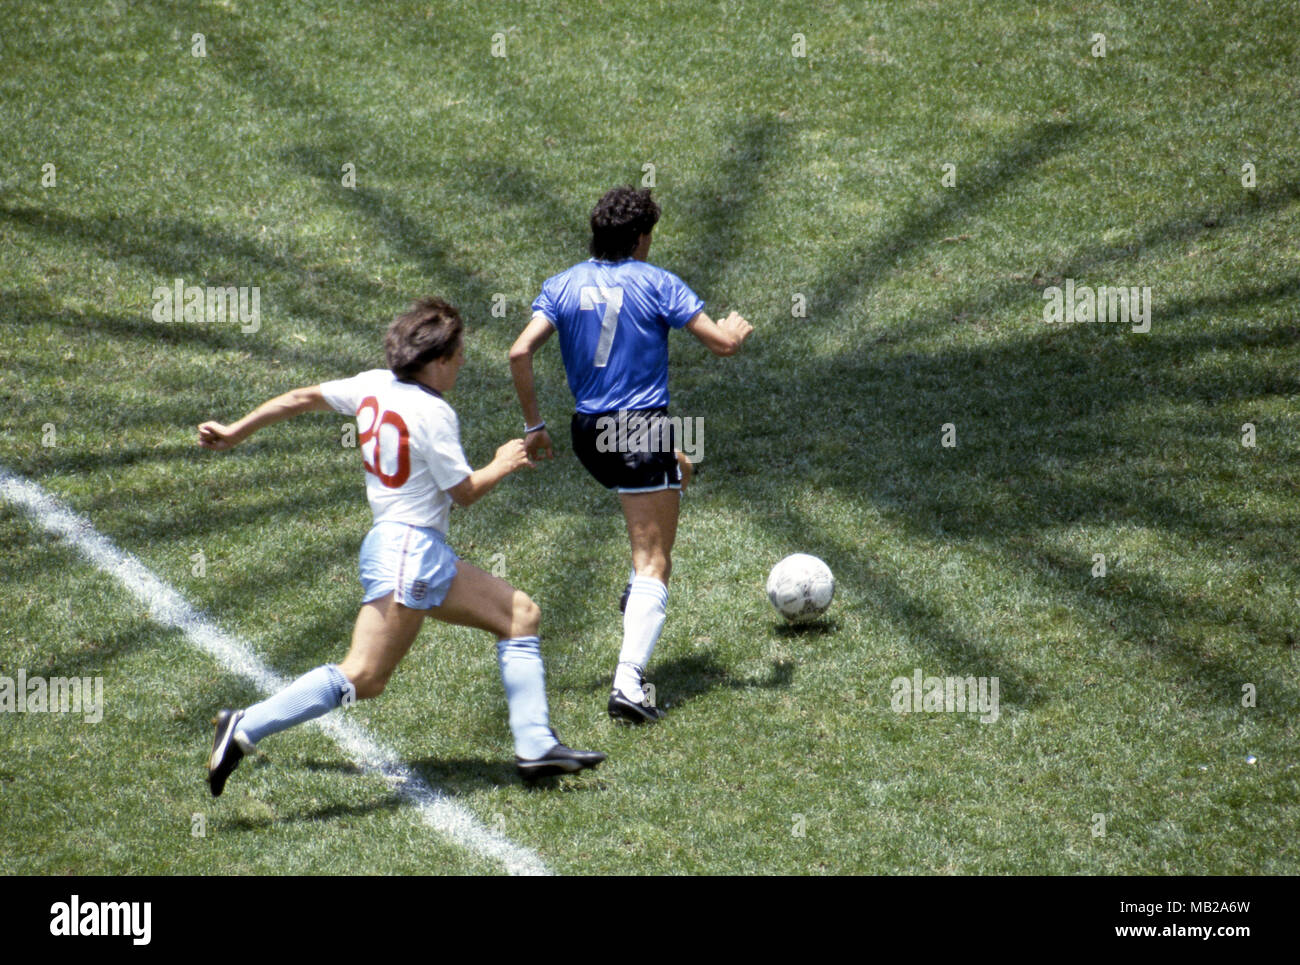 fifa-world-cup-mexico-1986-2261986-estadio-azteca-mexico-df-quarter-final-argentina-v-england-jorge-burruchaga-argentina-v-peter-beardsley-england-under-the-shadow-of-the-stadium-loudspeakers-MB2A6W.jpg